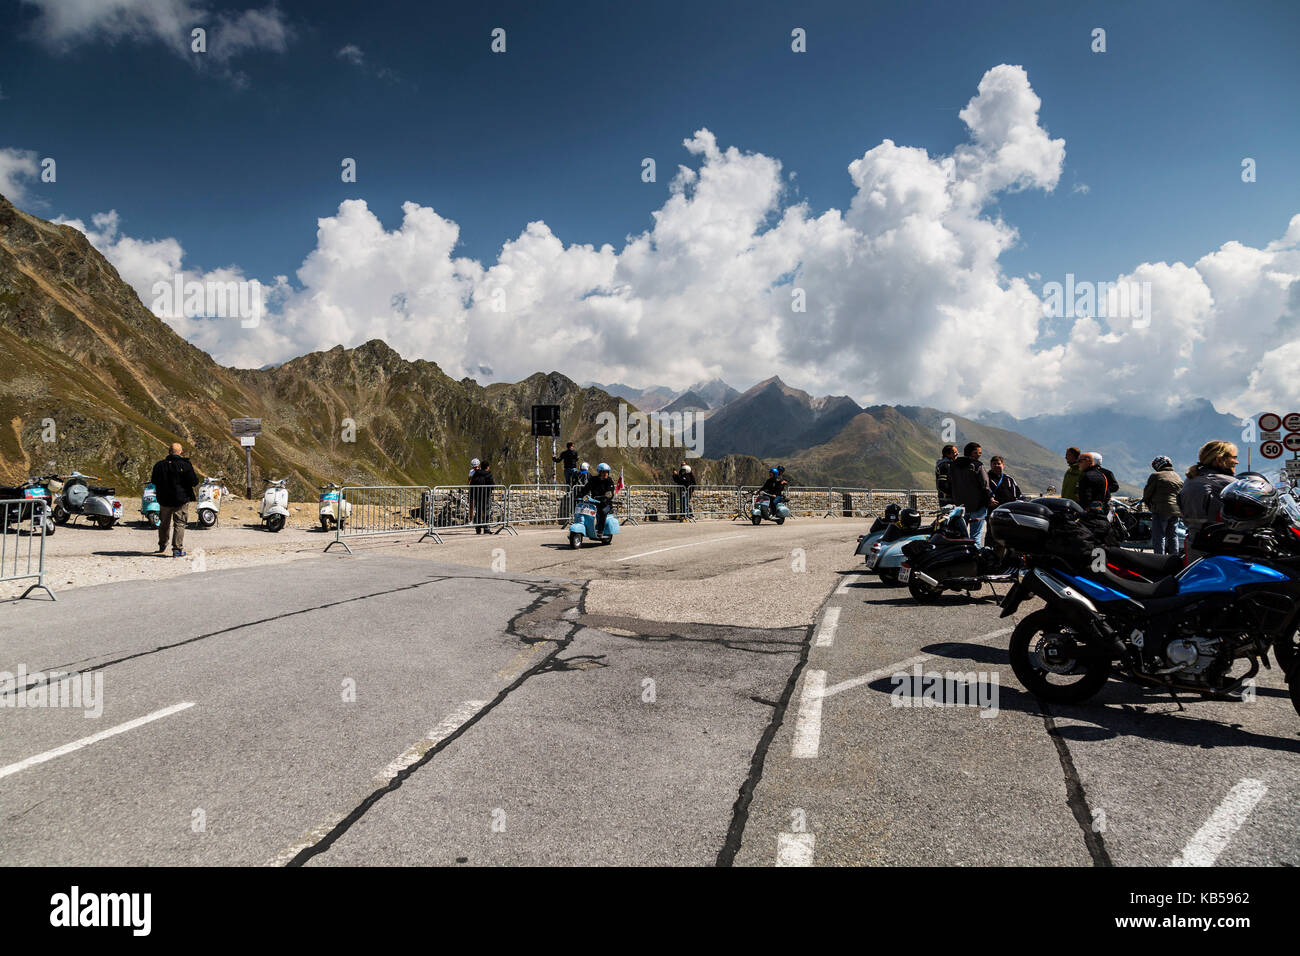 Europa, Austria/Italia, Alpes, Montañas - Passo Rombo - Timmelsjoch Foto de stock